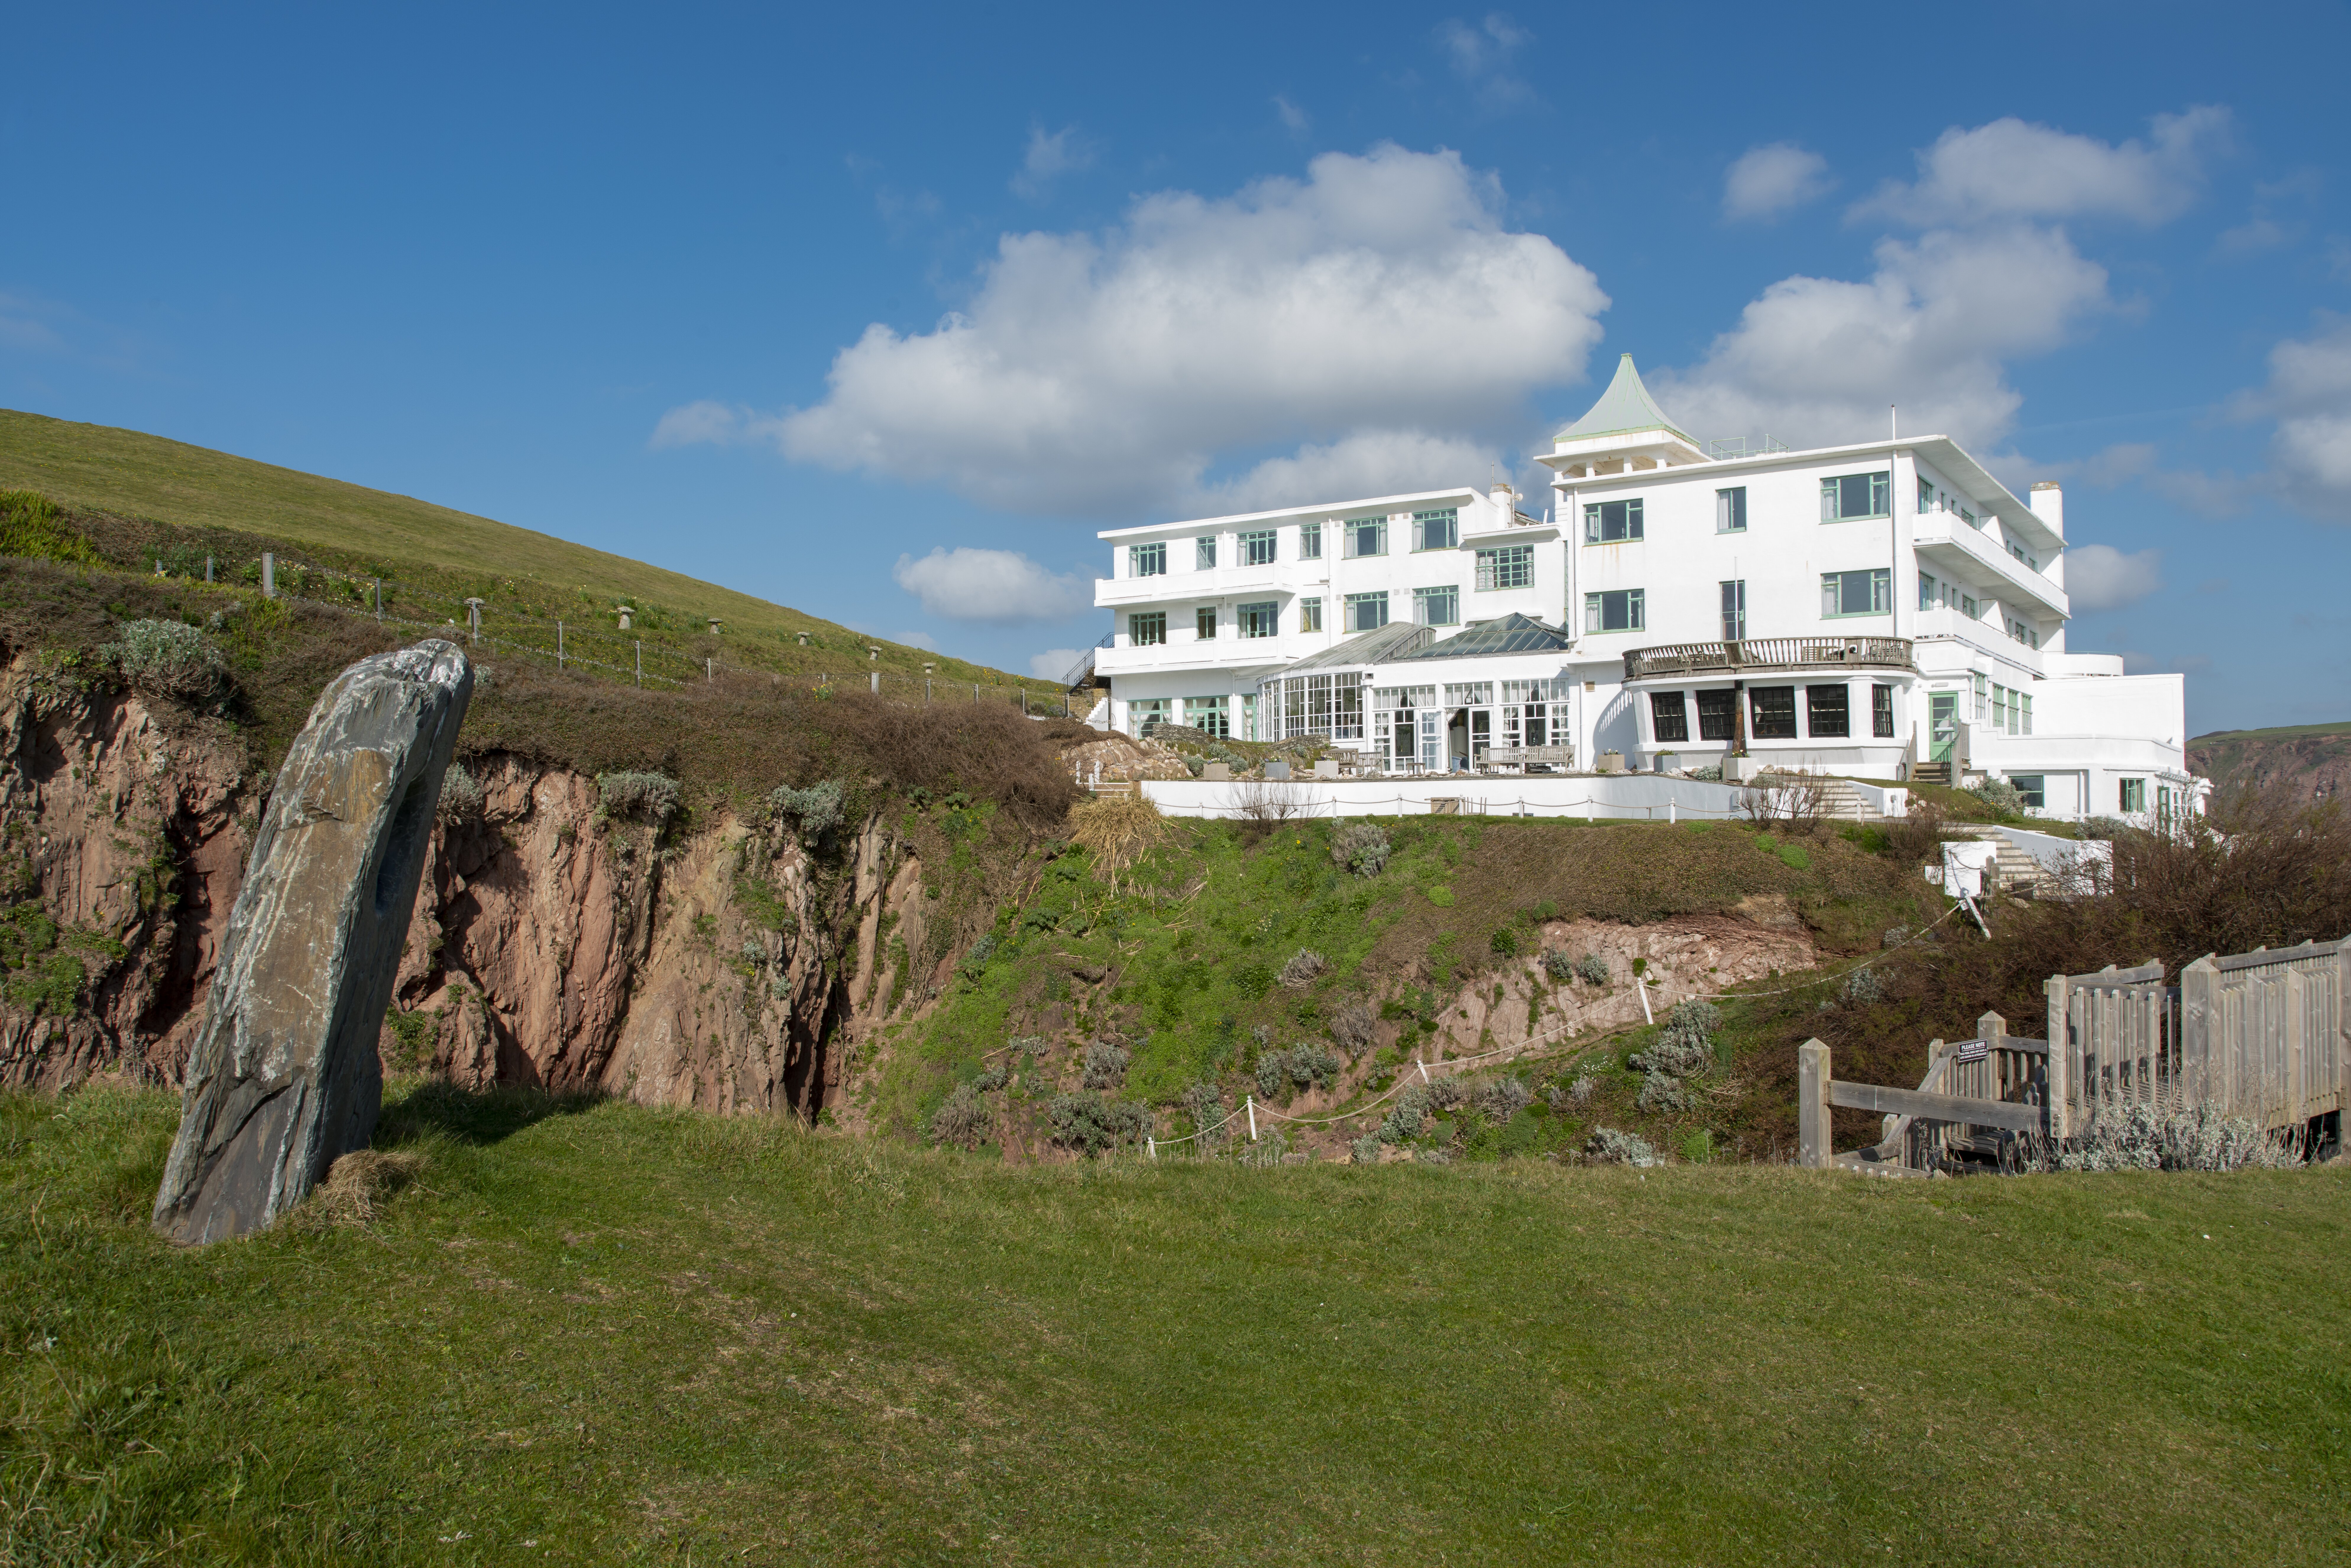 Devon's Burgh Island hotel on the market for £15m